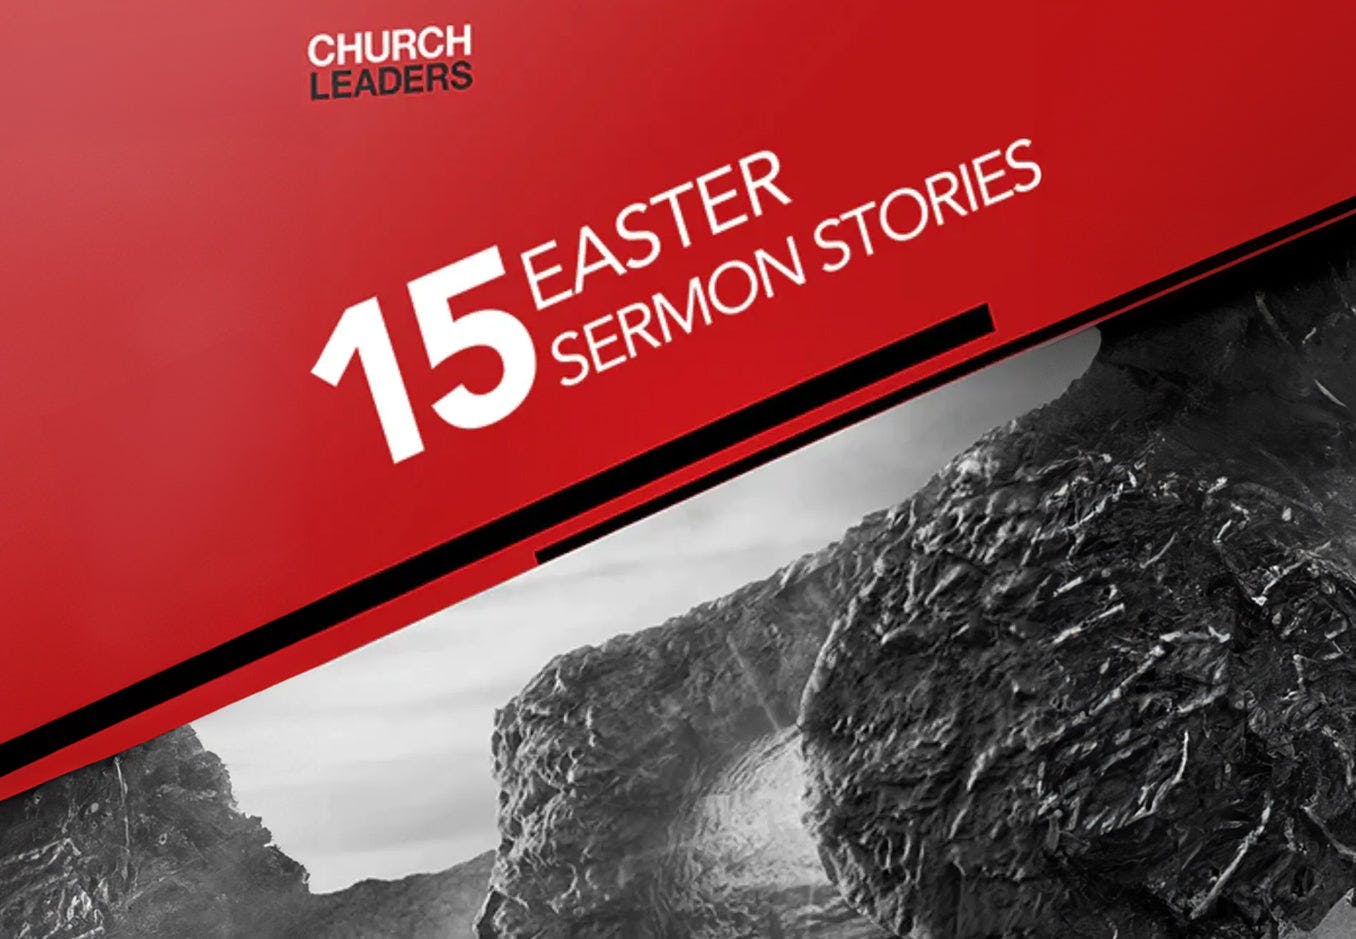 15 Sermon Stories for Christmas